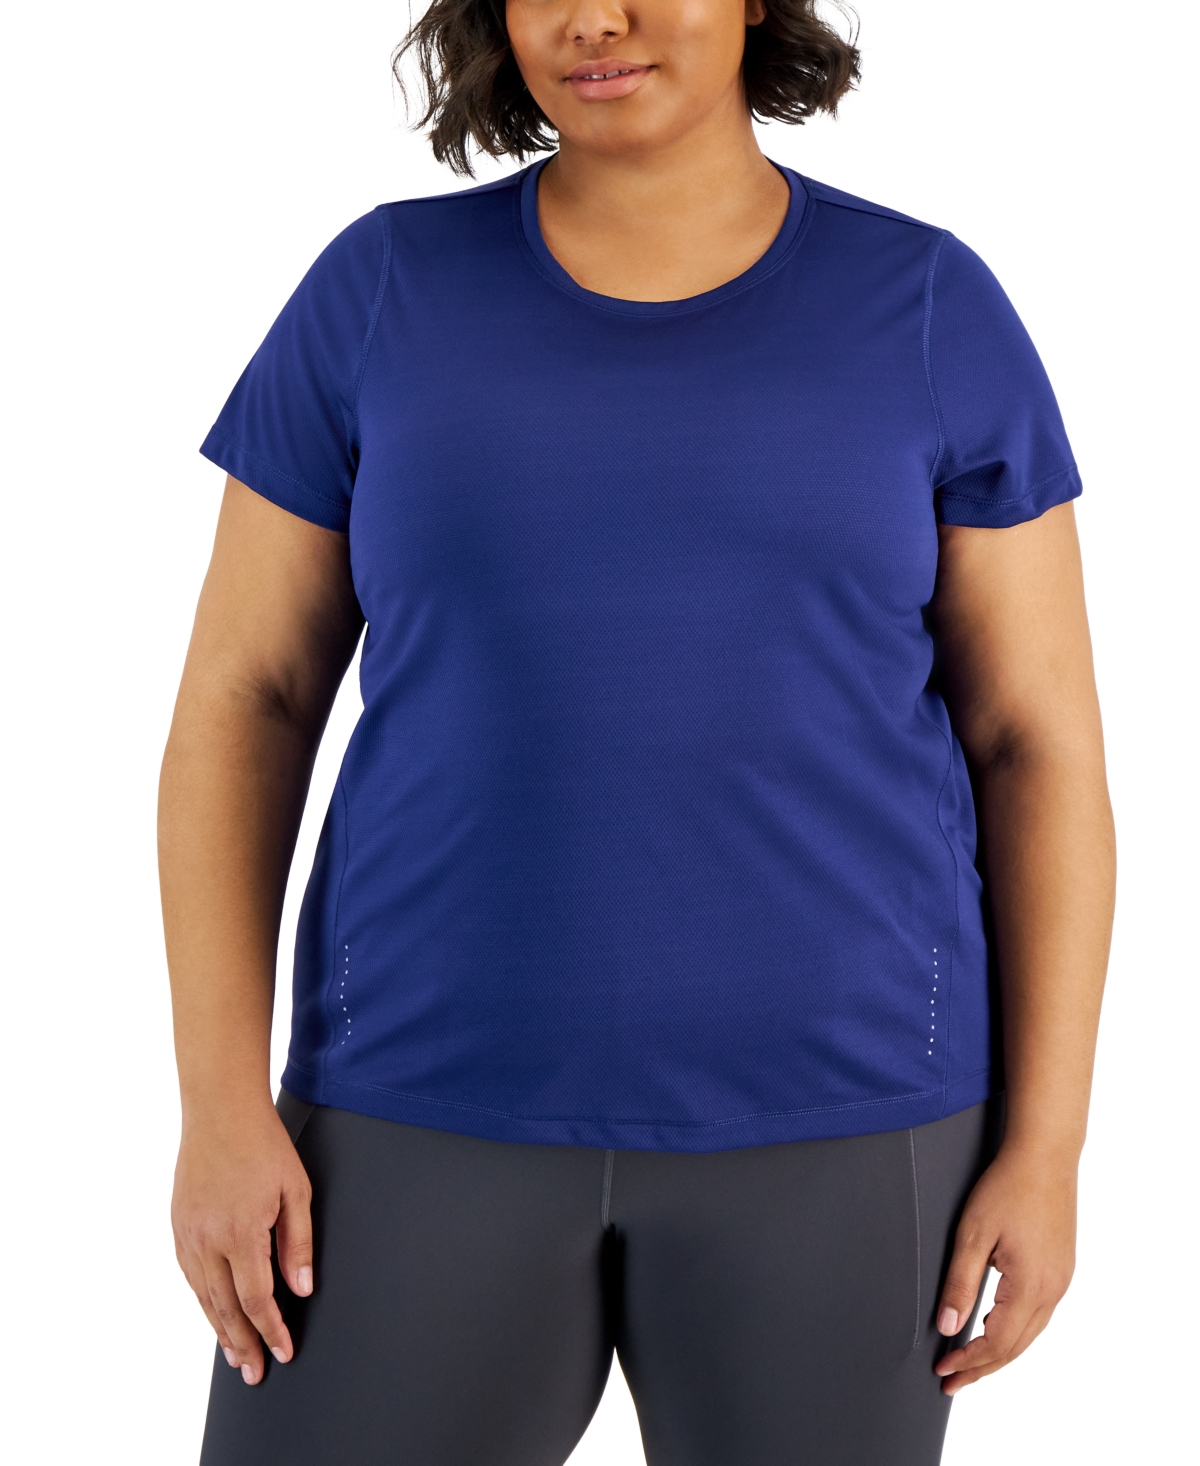 Plus Size Birdseye Mesh T-Shirt, Created for Macy's - Skysail Blue